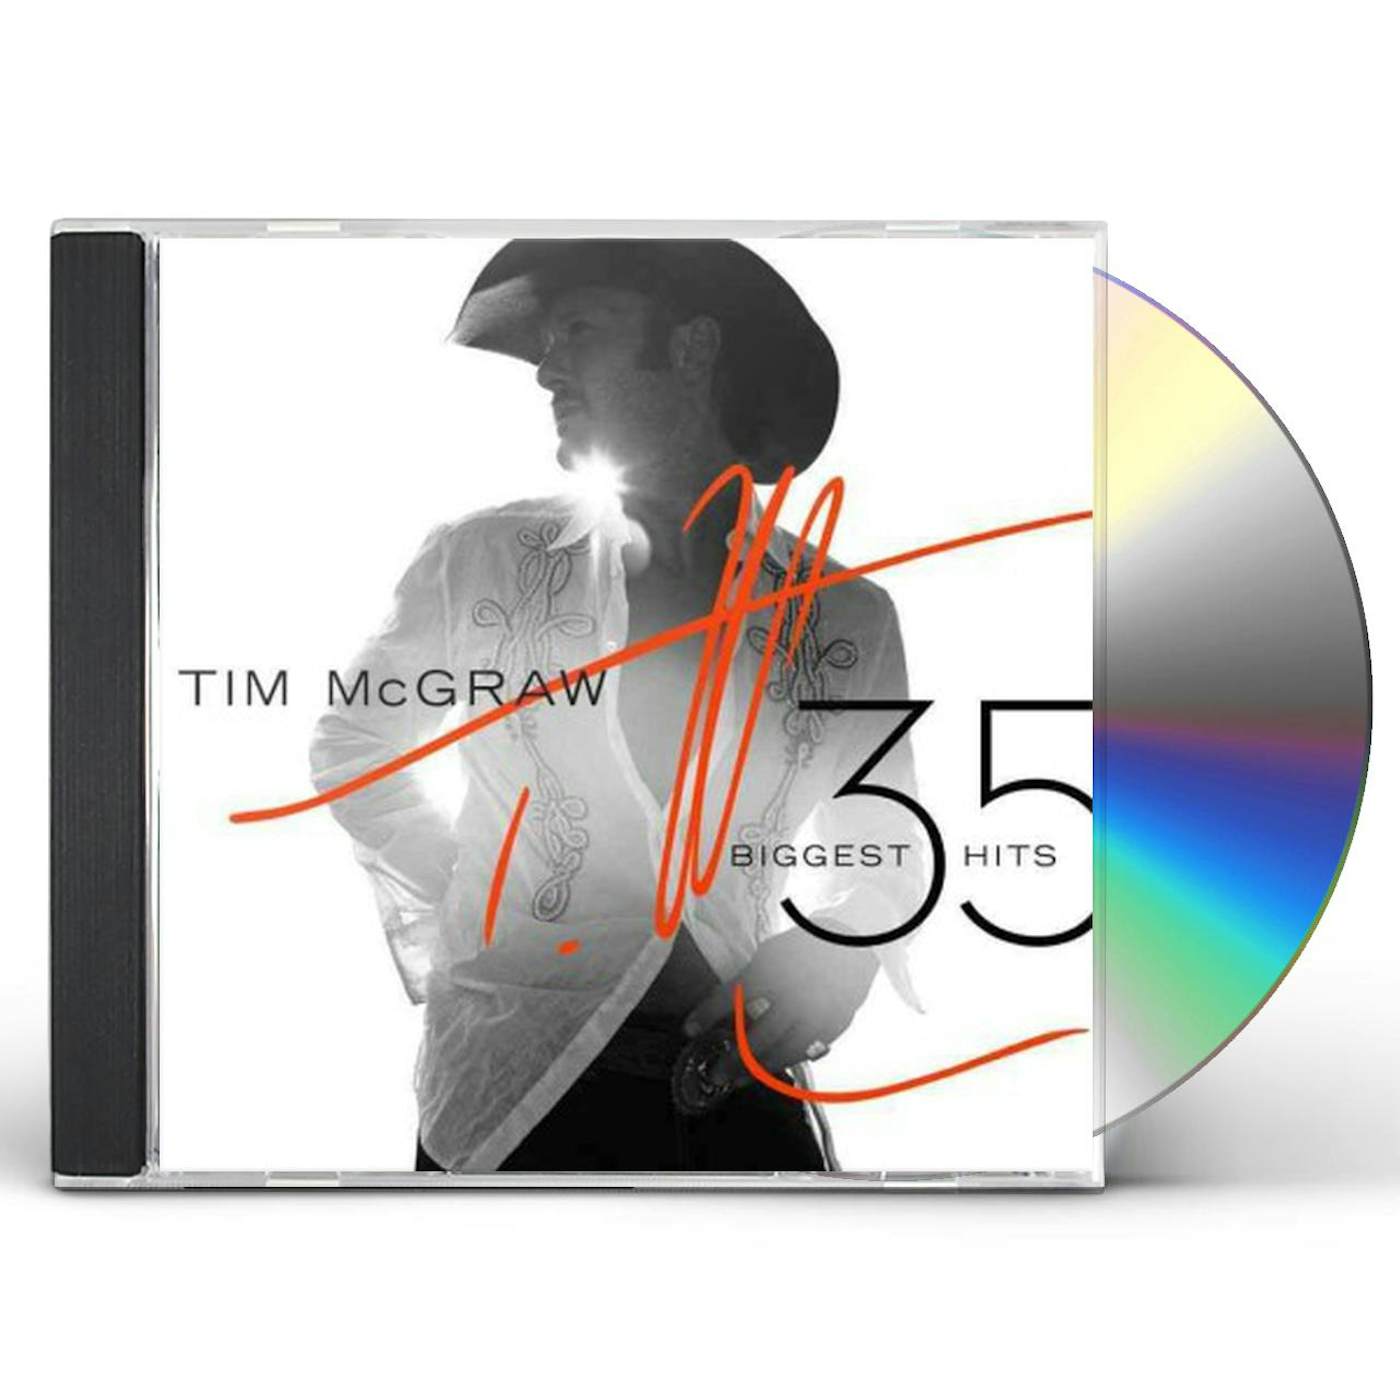 Tim McGraw 35 BIGGEST HITS CD